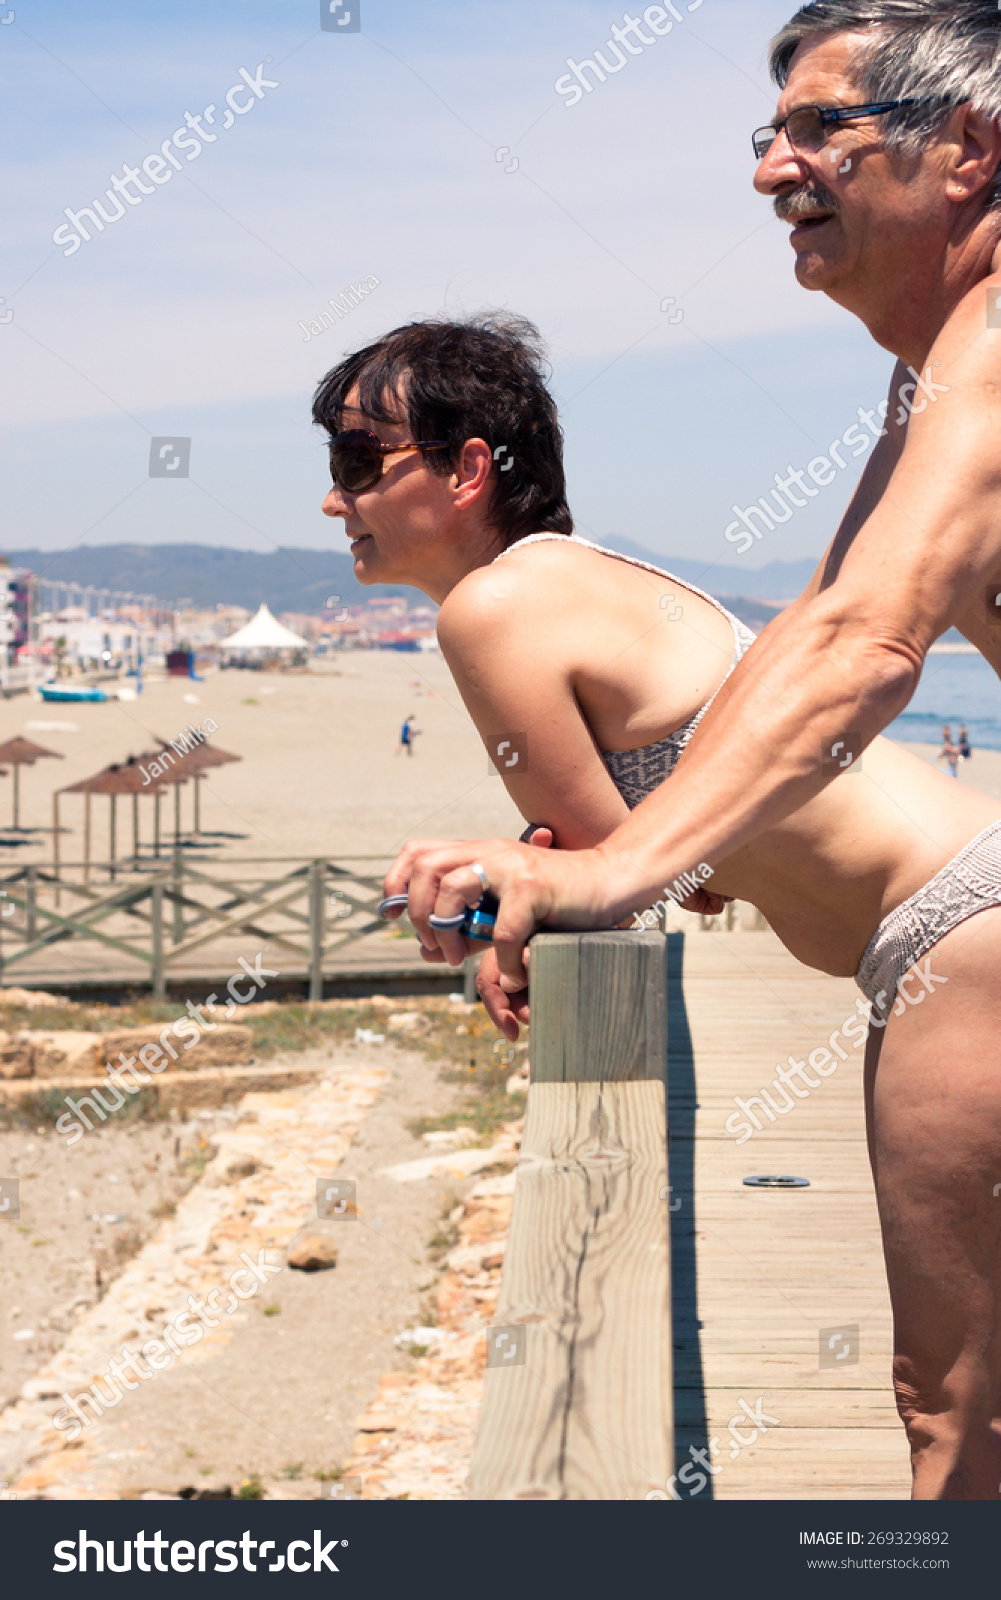 carlos faisal add photo amateur topless beach